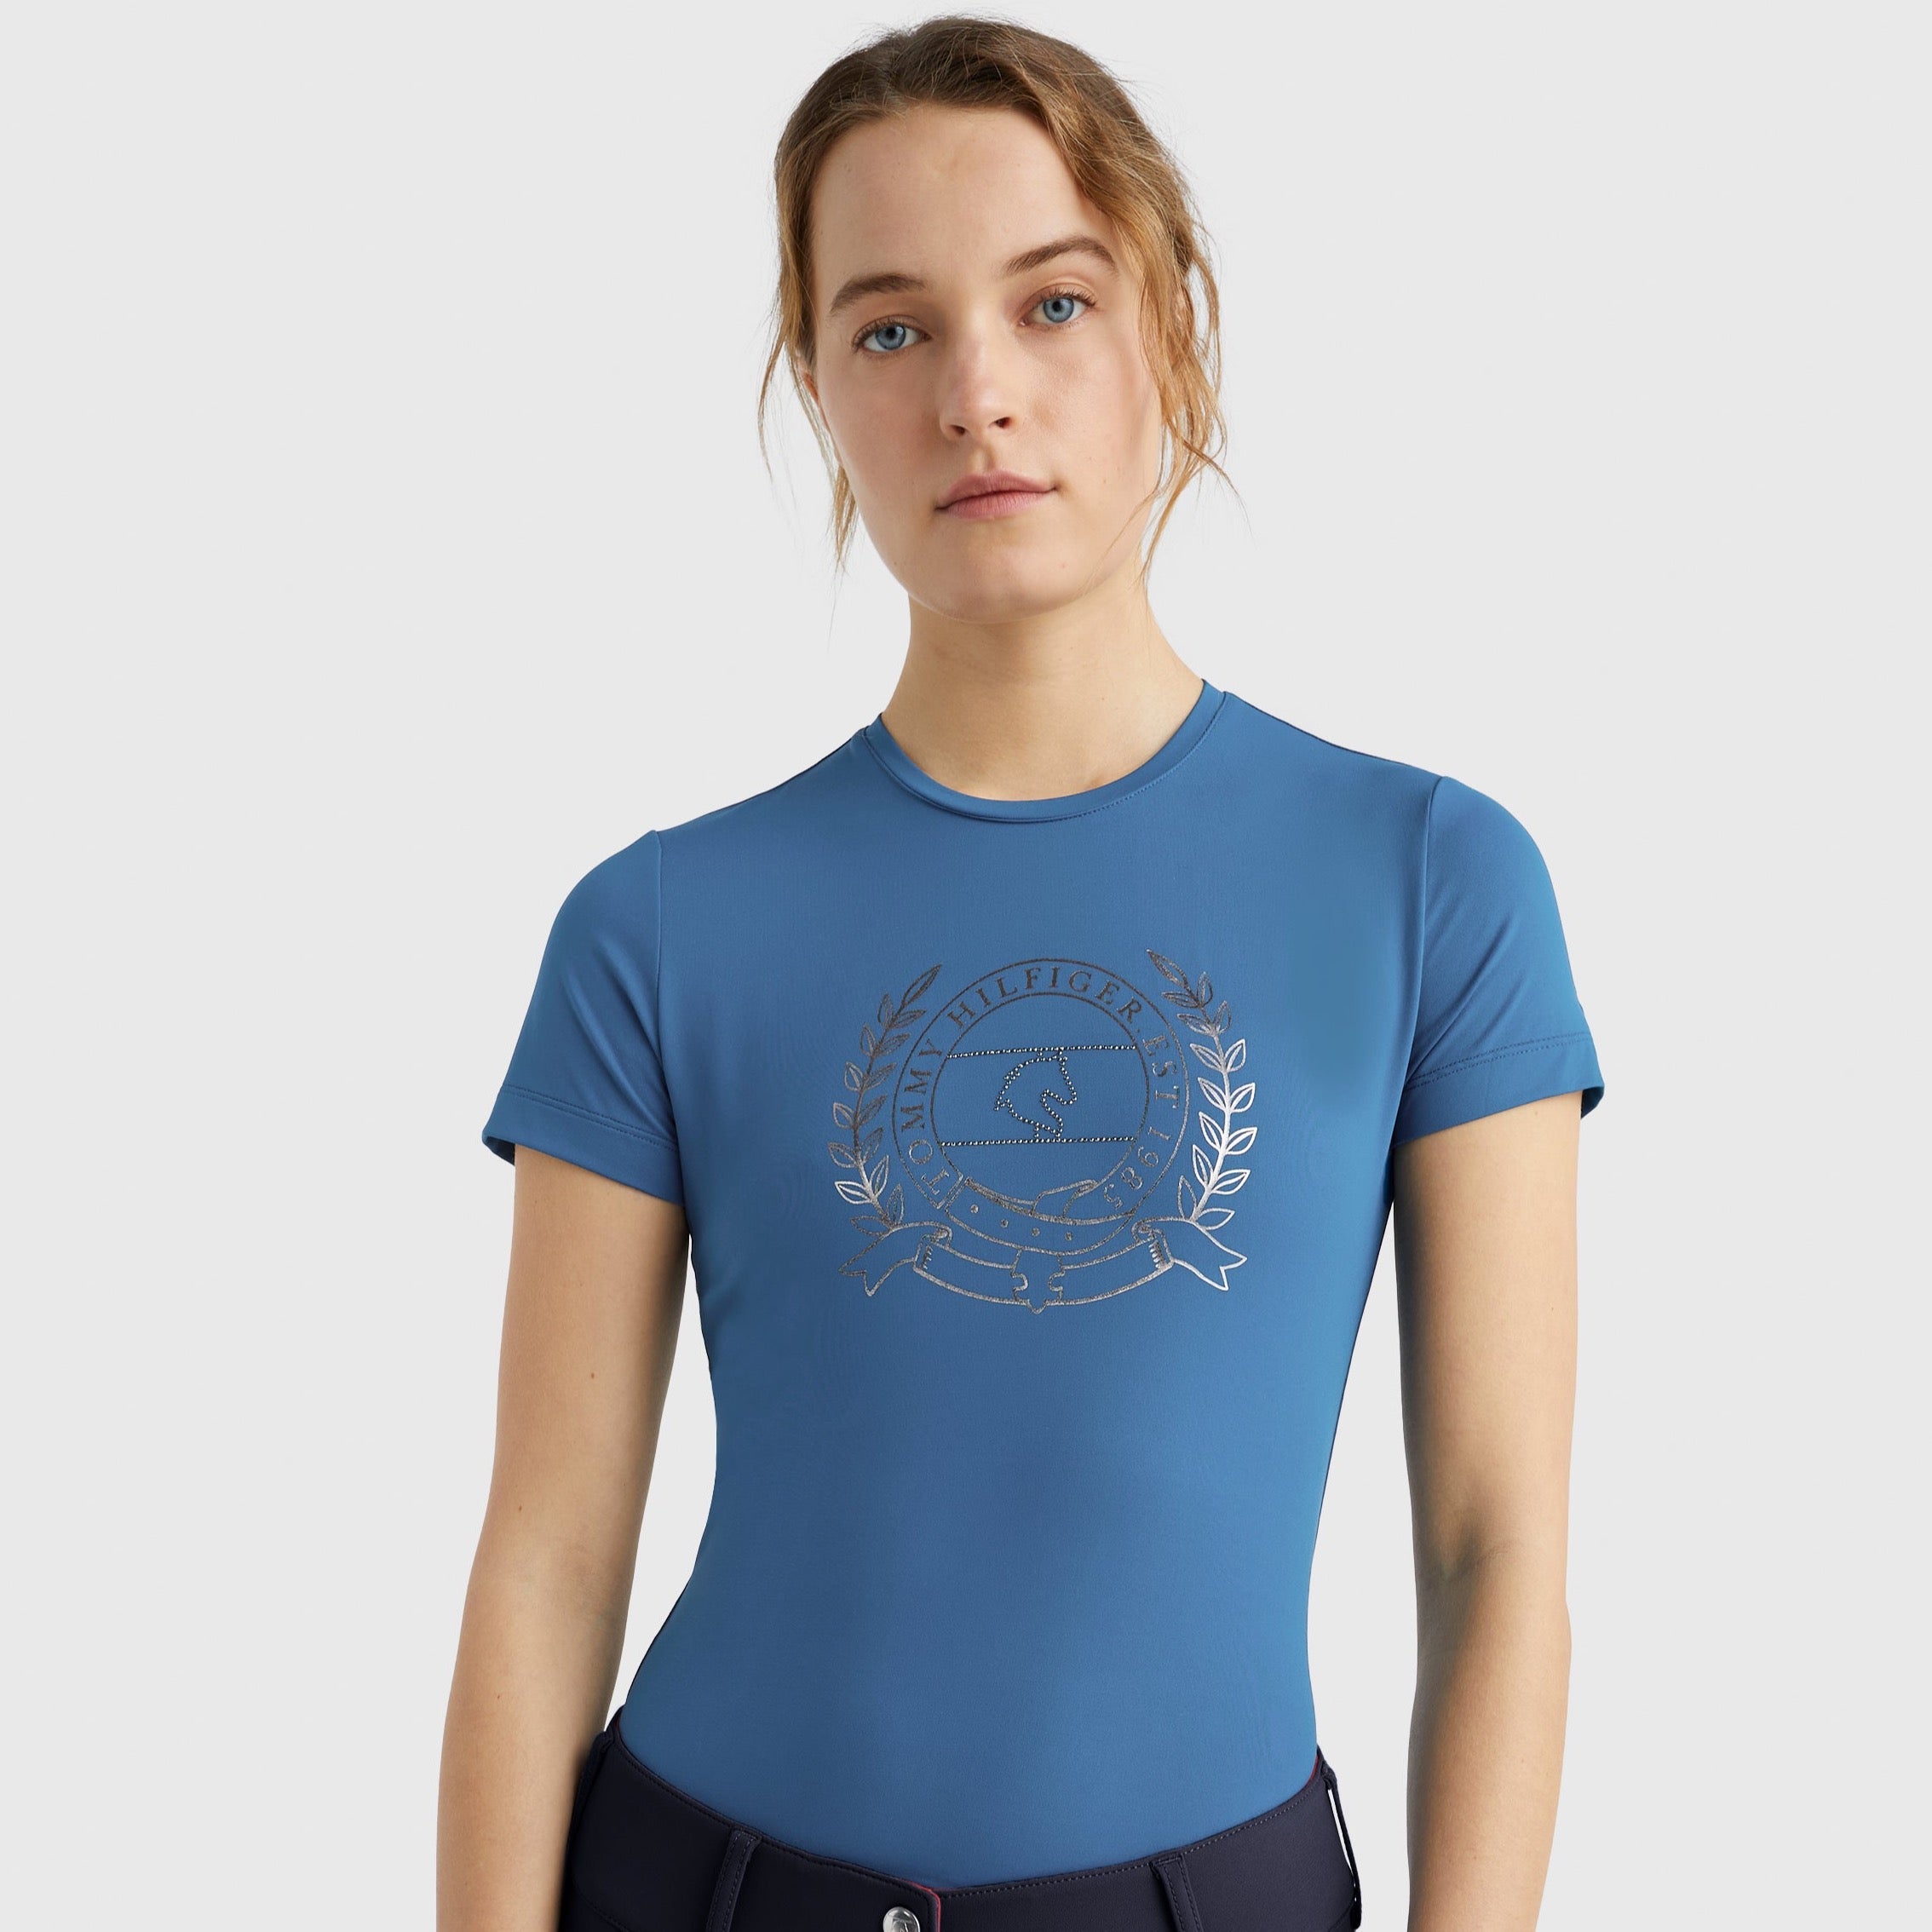 Tommy Hilfiger Crest Rhinestone performance t-shirt in blue coast